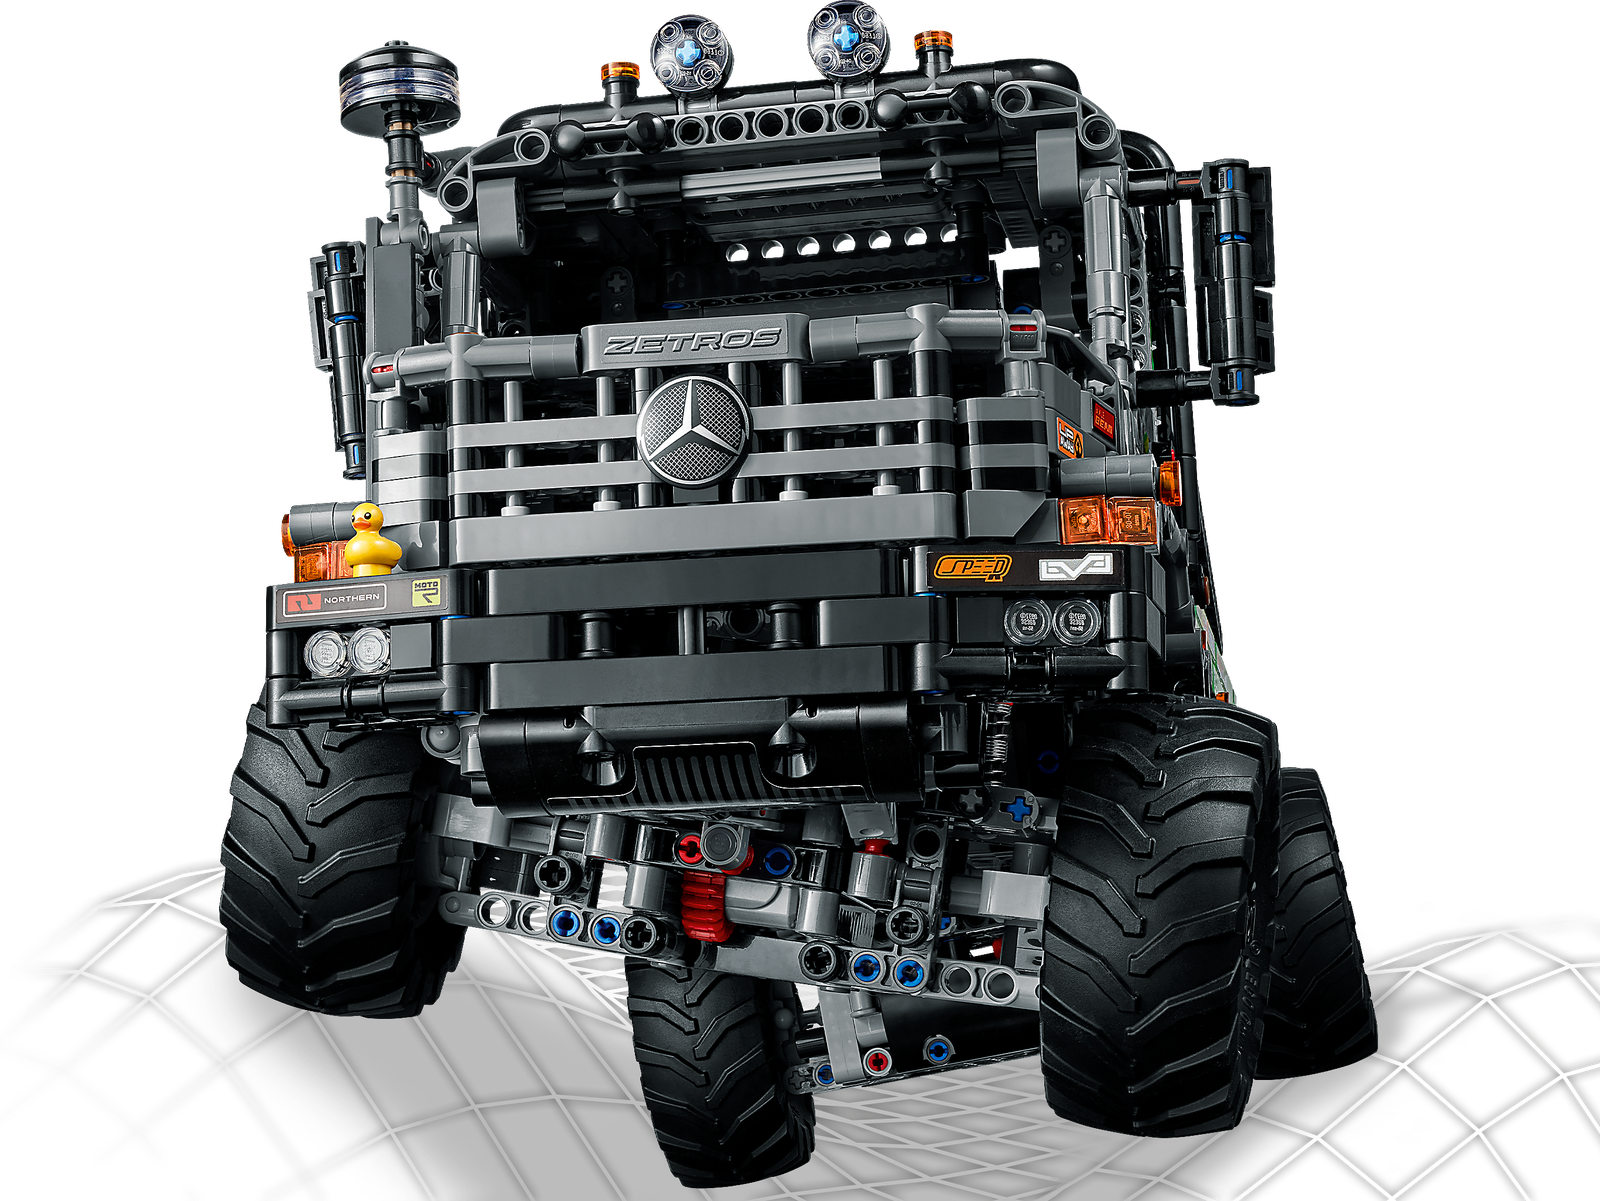 Lego Technic 4x4 Mercedes-Benz Zetros Trial Truck 42129